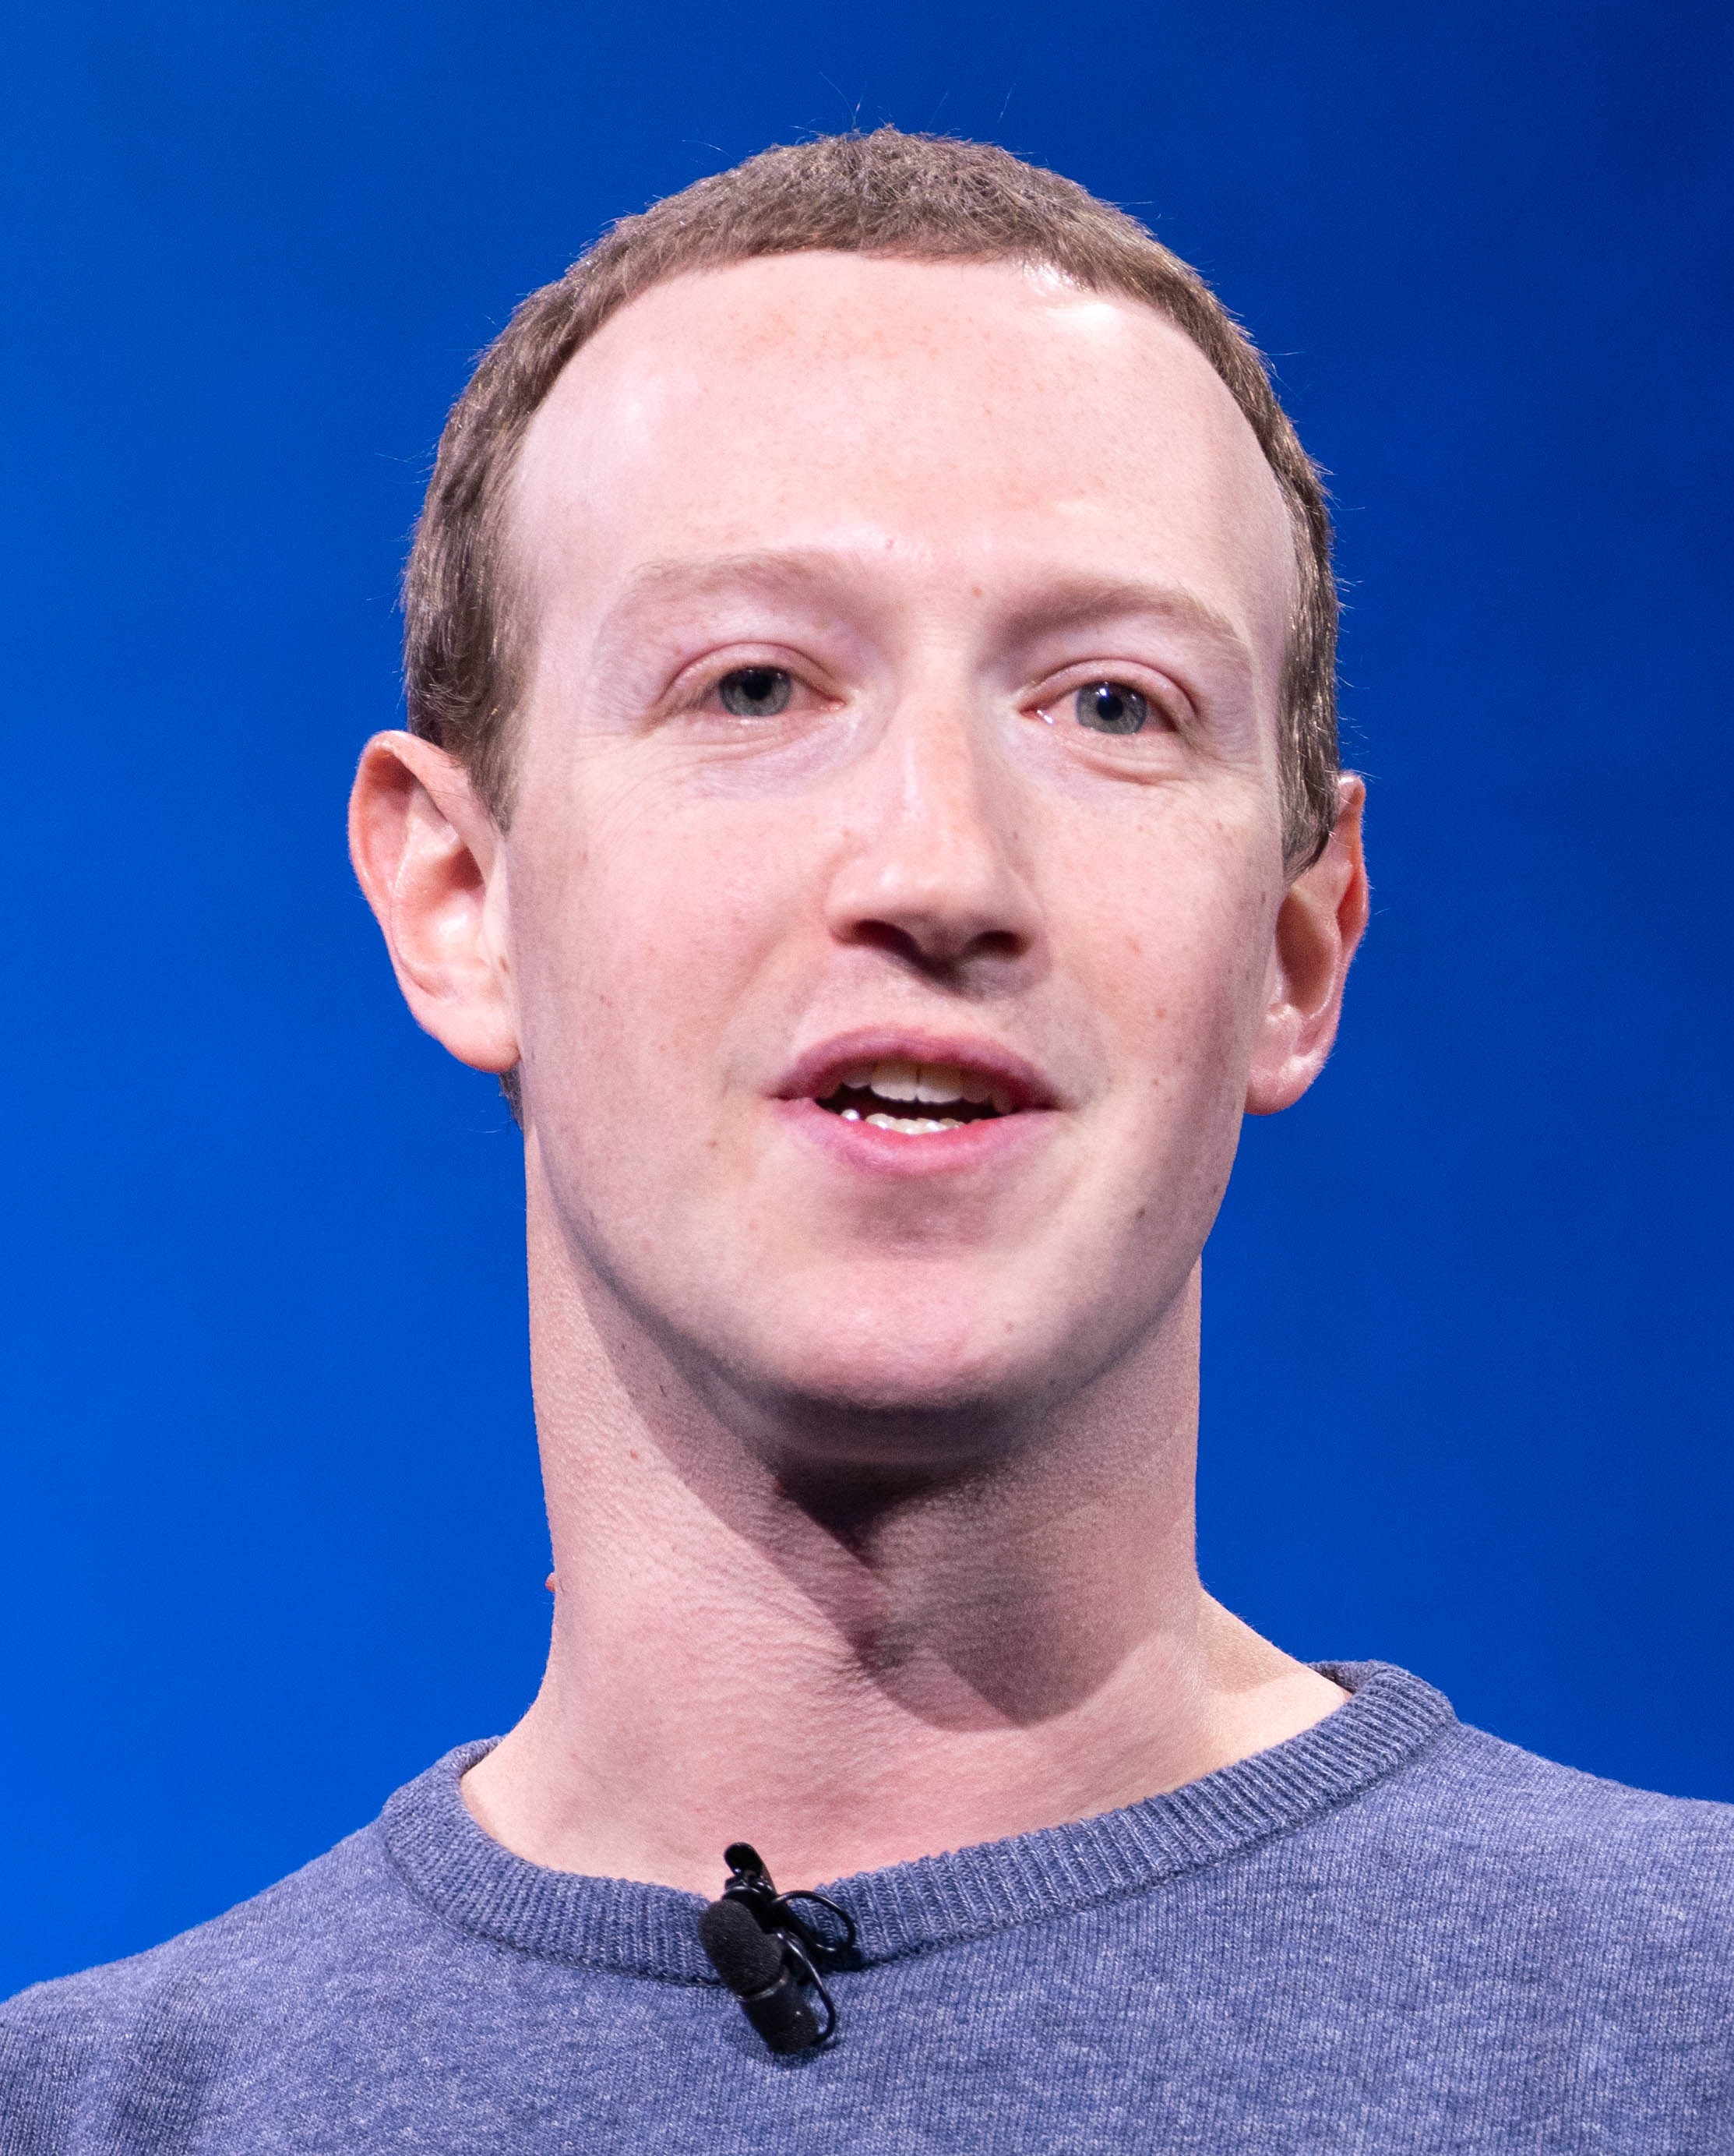 Affluent Celebrities, Mark Zuckerberg